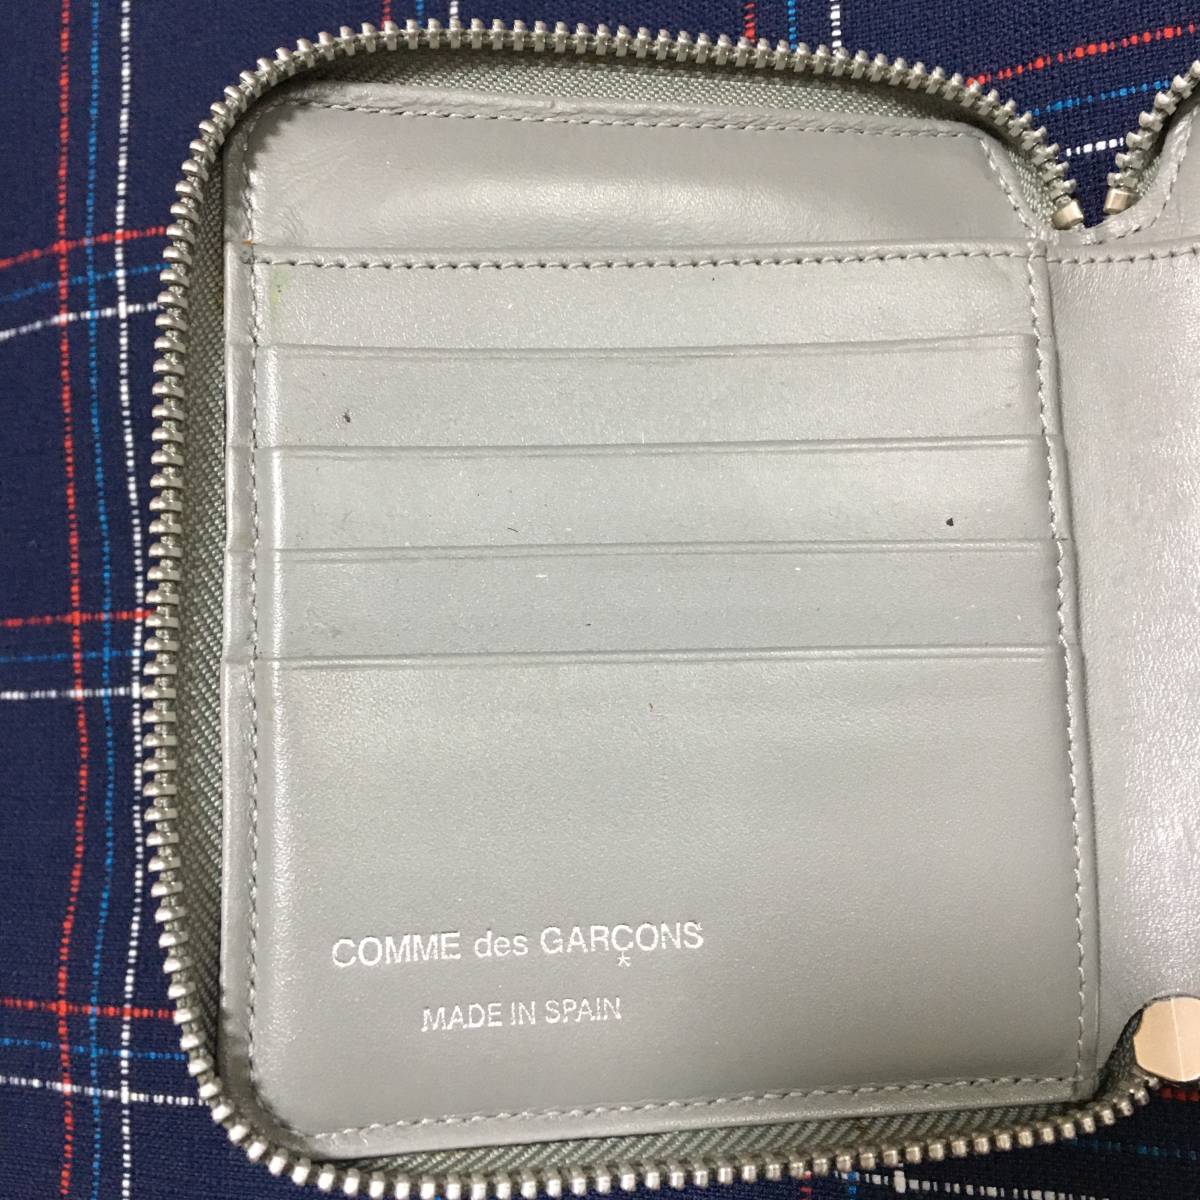 # beautiful goods regular goods # Comme des Garcons dot pattern wallet 2. folding purse # gray #COMME des GARONS CDG Wallet polka dots# Spain made #